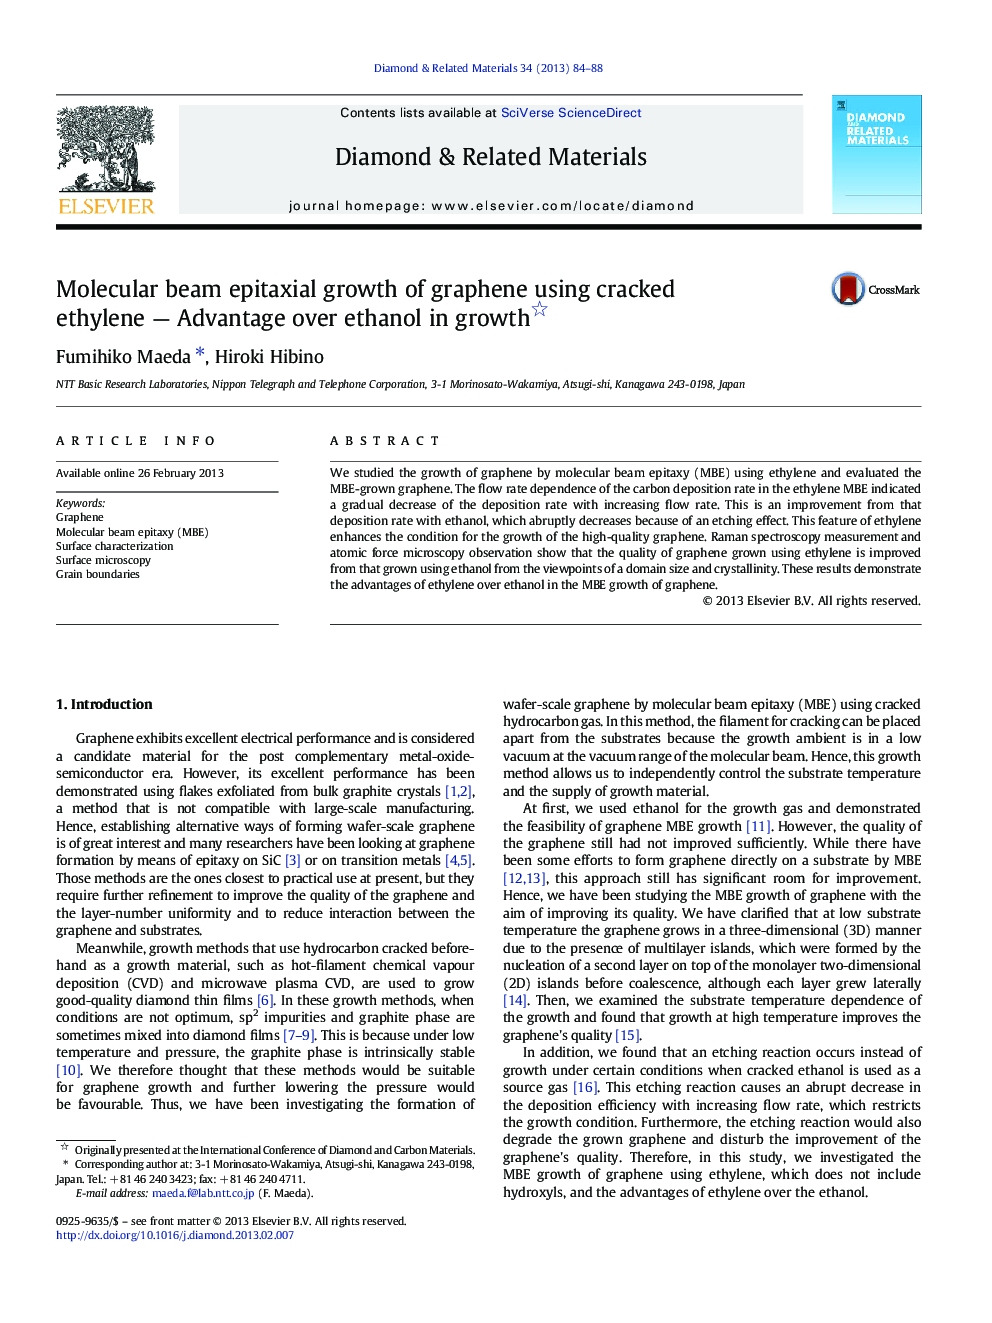 Molecular beam epitaxial growth of graphene using cracked ethylene — Advantage over ethanol in growth 